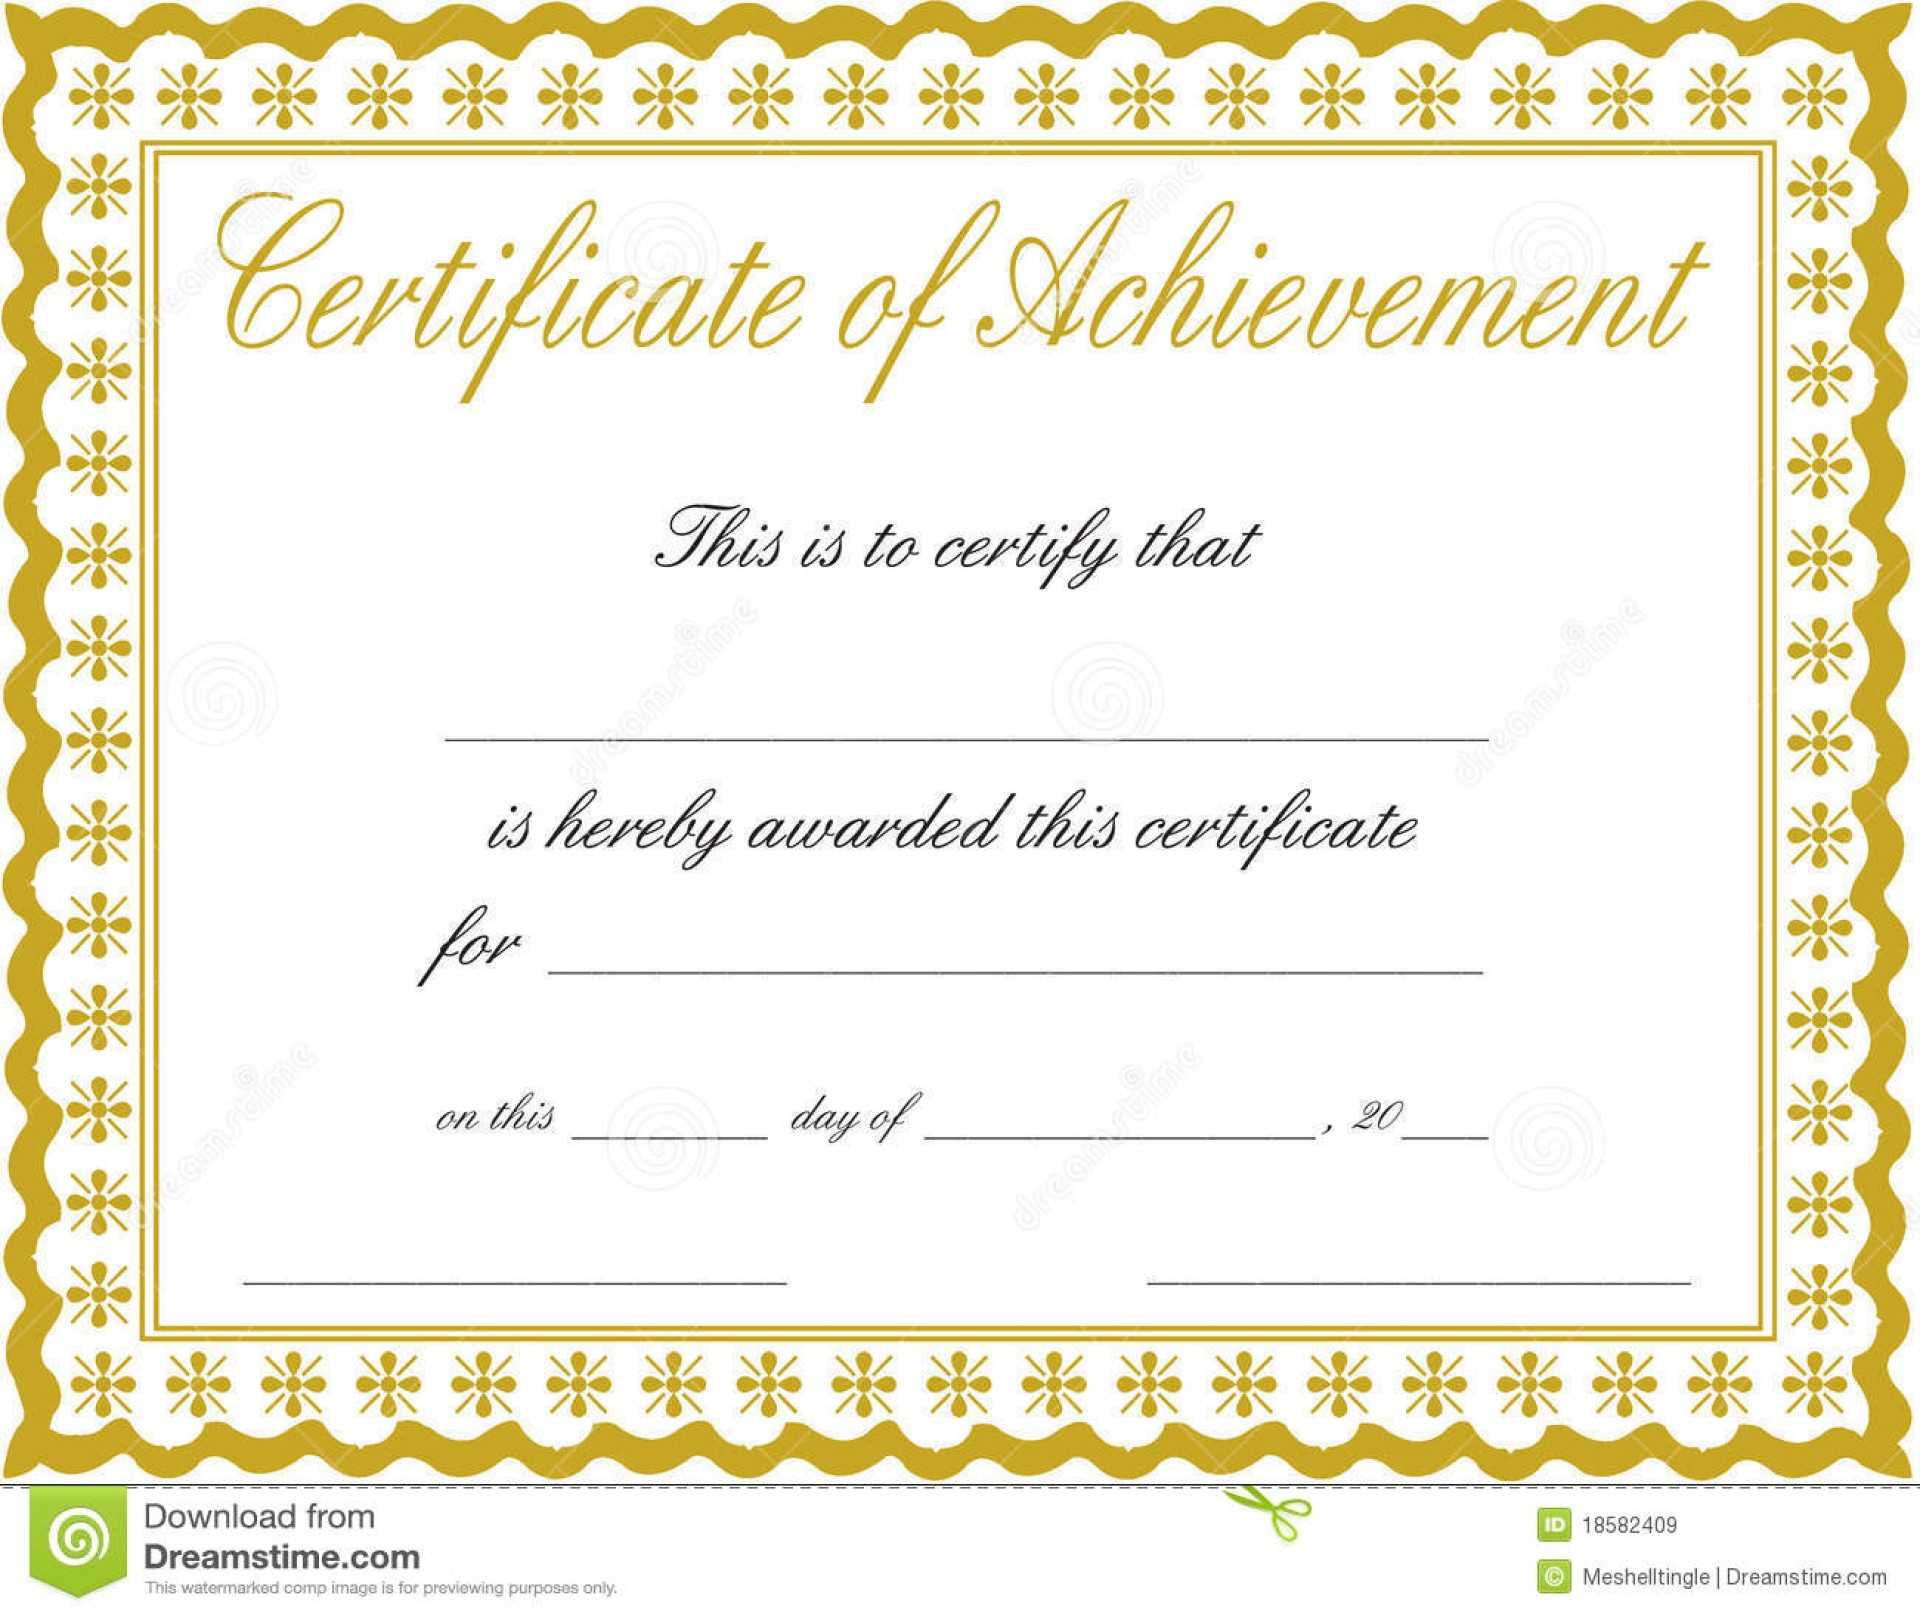 003 Certificate Of Achievement Template Free Ideas With Regard To Blank Certificate Of Achievement Template